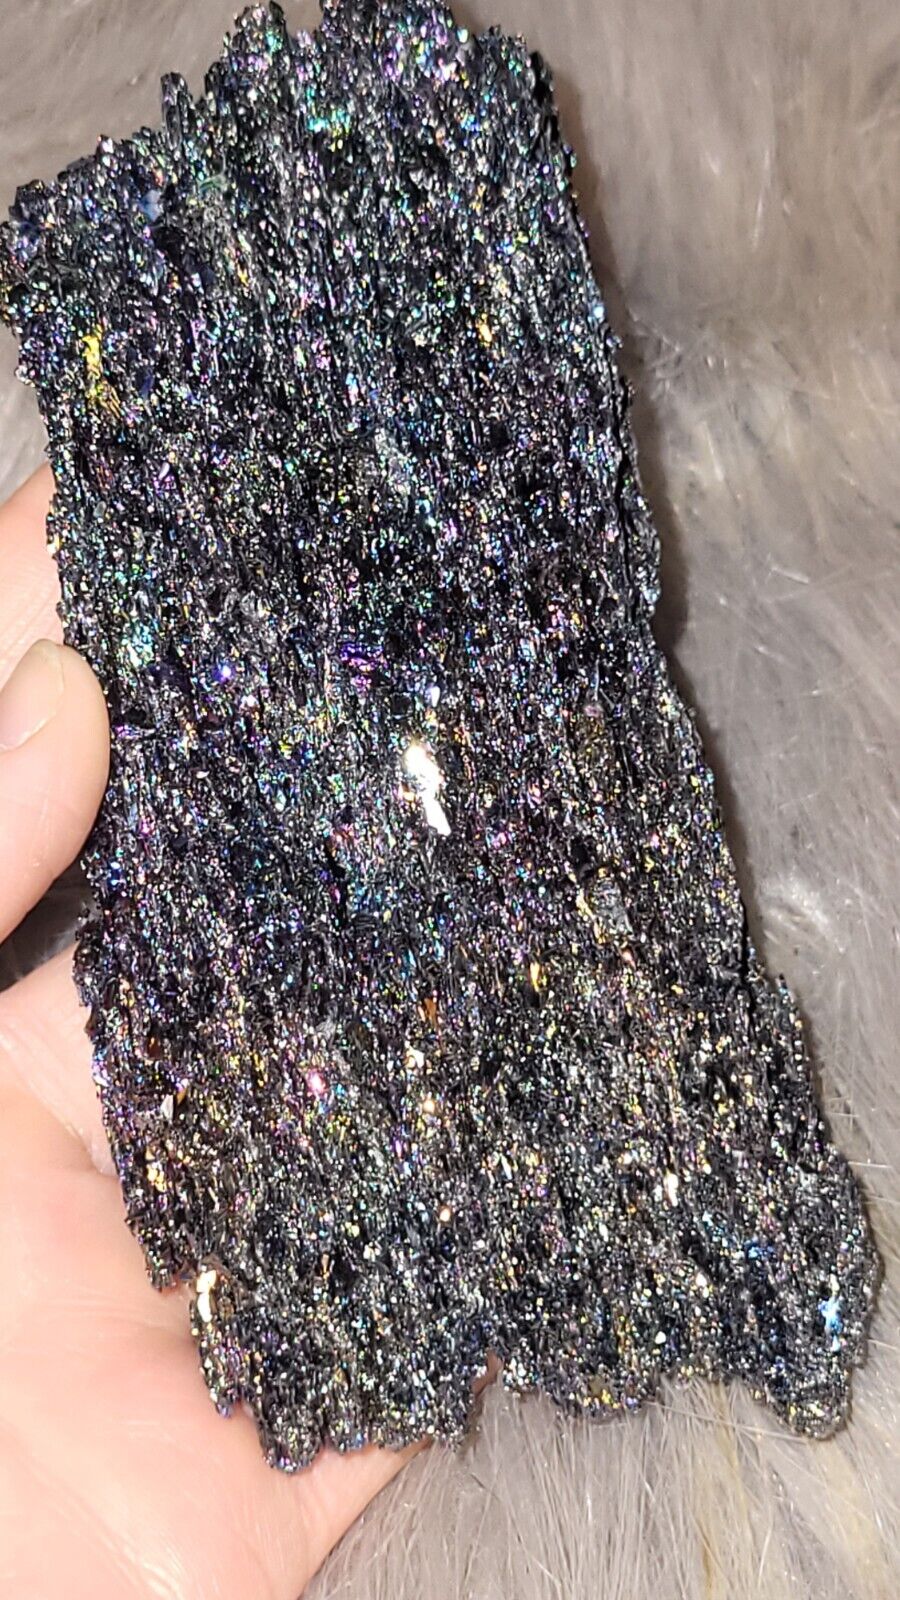 Carborundum silicon carbide rainbow mineral crystal healing gemstone